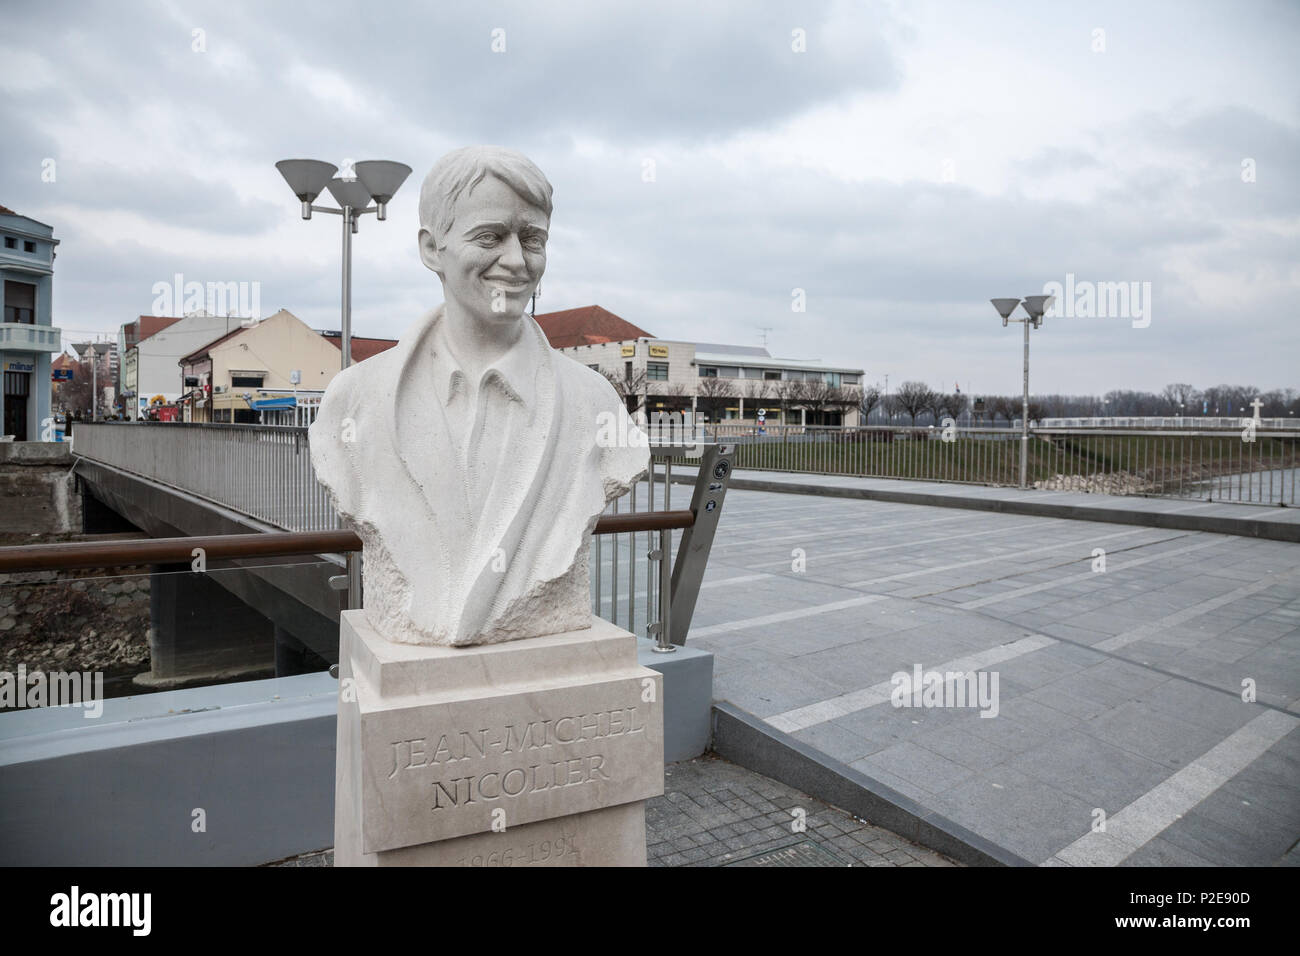 FEBRUARY, CROATIA - FEBRUARY 25, 2018: Statue of Jean Michel Nicolier in the war torn city of Vukovar, near the Nicolier Bridge. Jean Michel Nicolier  Stock Photo